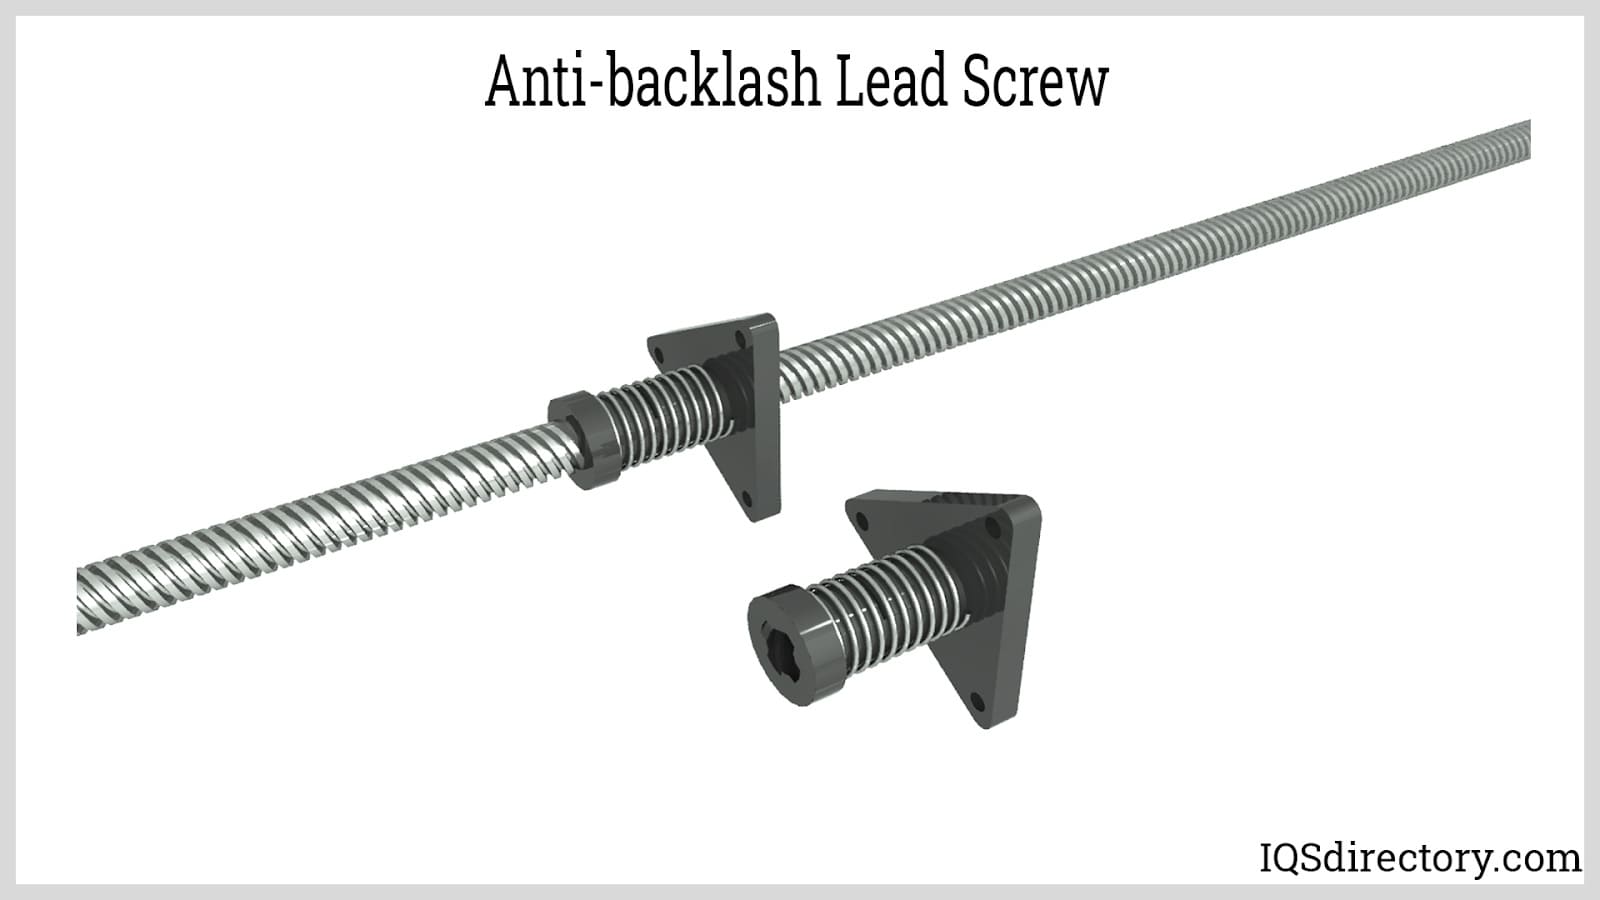 Anti-backlash Lead Screw